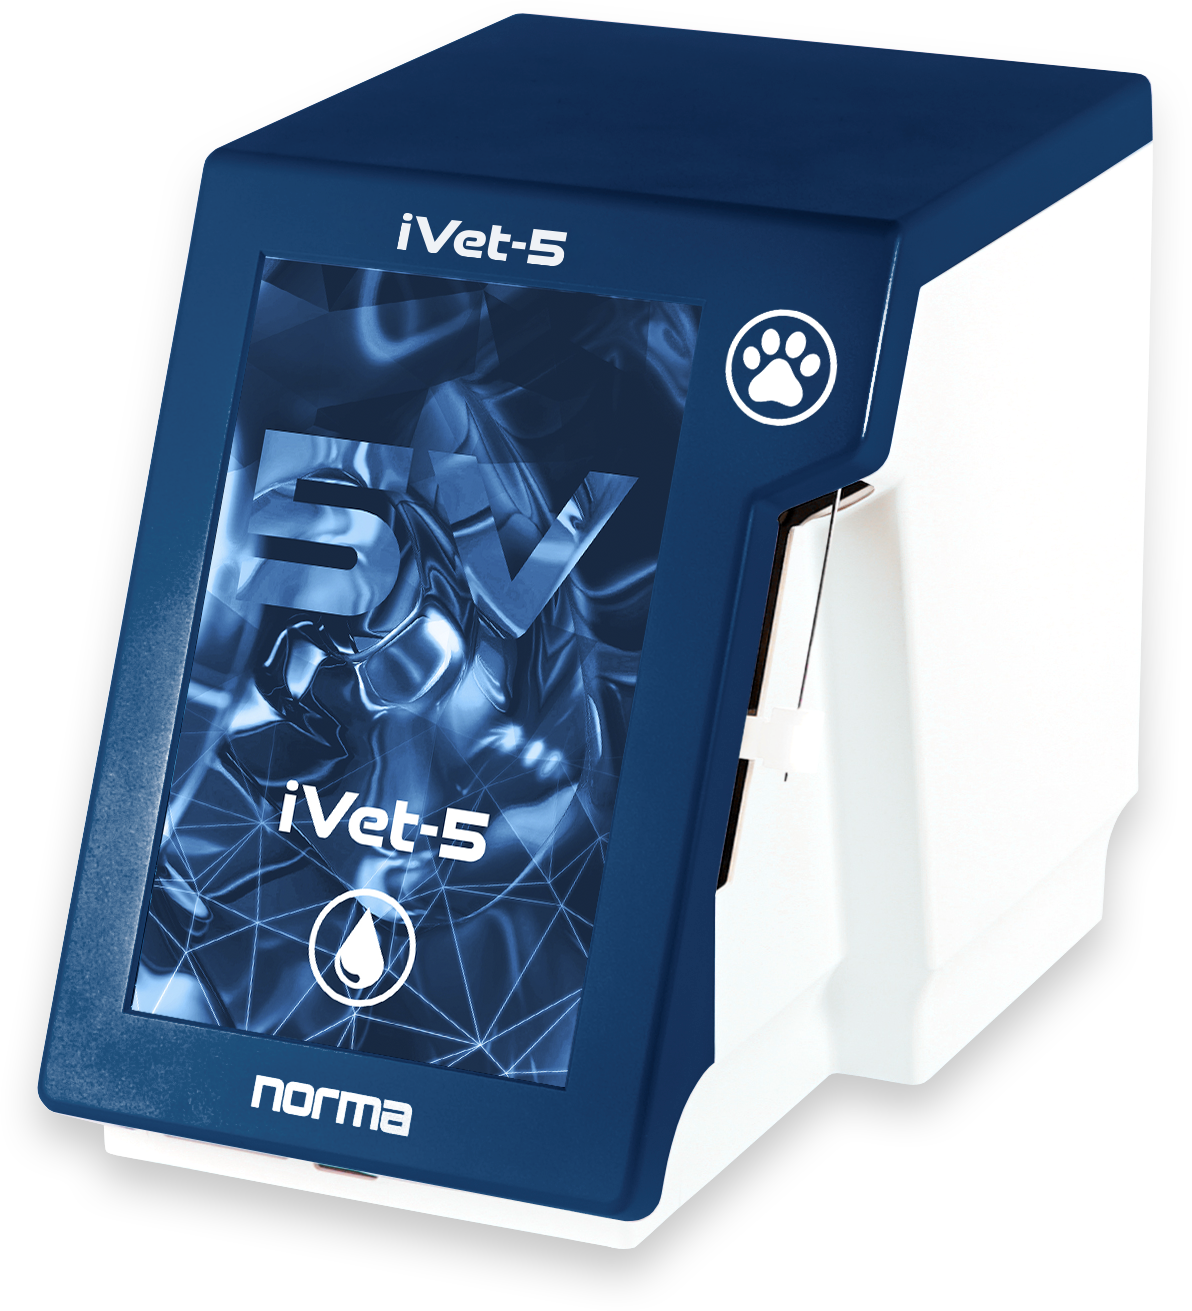 Norma iVet-5, the smallest laser-based 5-diff veterinary hematology analyzer